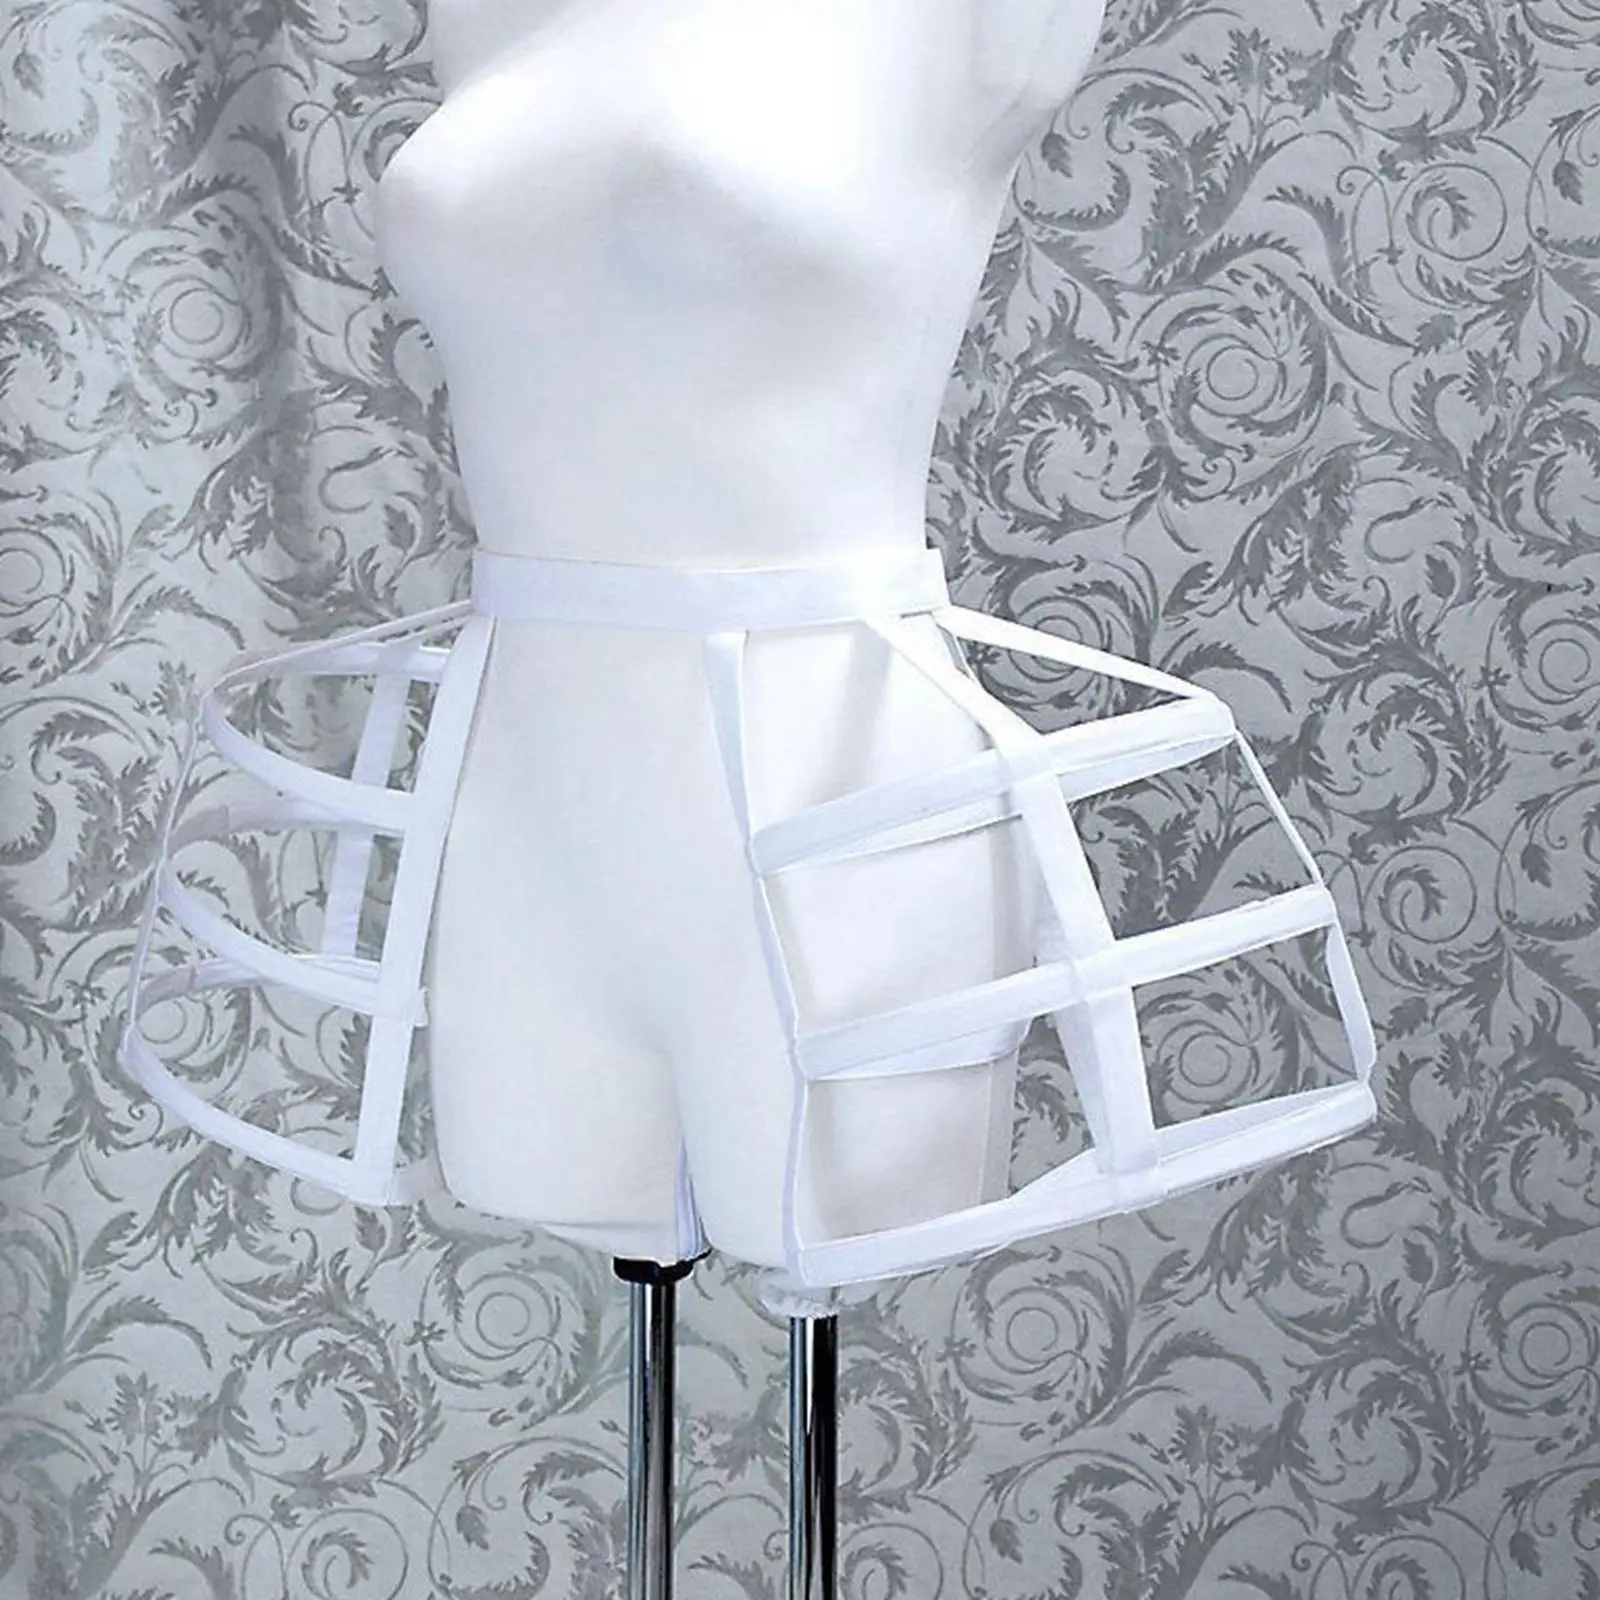 Cage Hoop Skirt Petticoat Lolita Crinoline Underskirt Hoop Skirt Victorian Bustle Petticoat Skirt Pannier Underskirt for Wedding